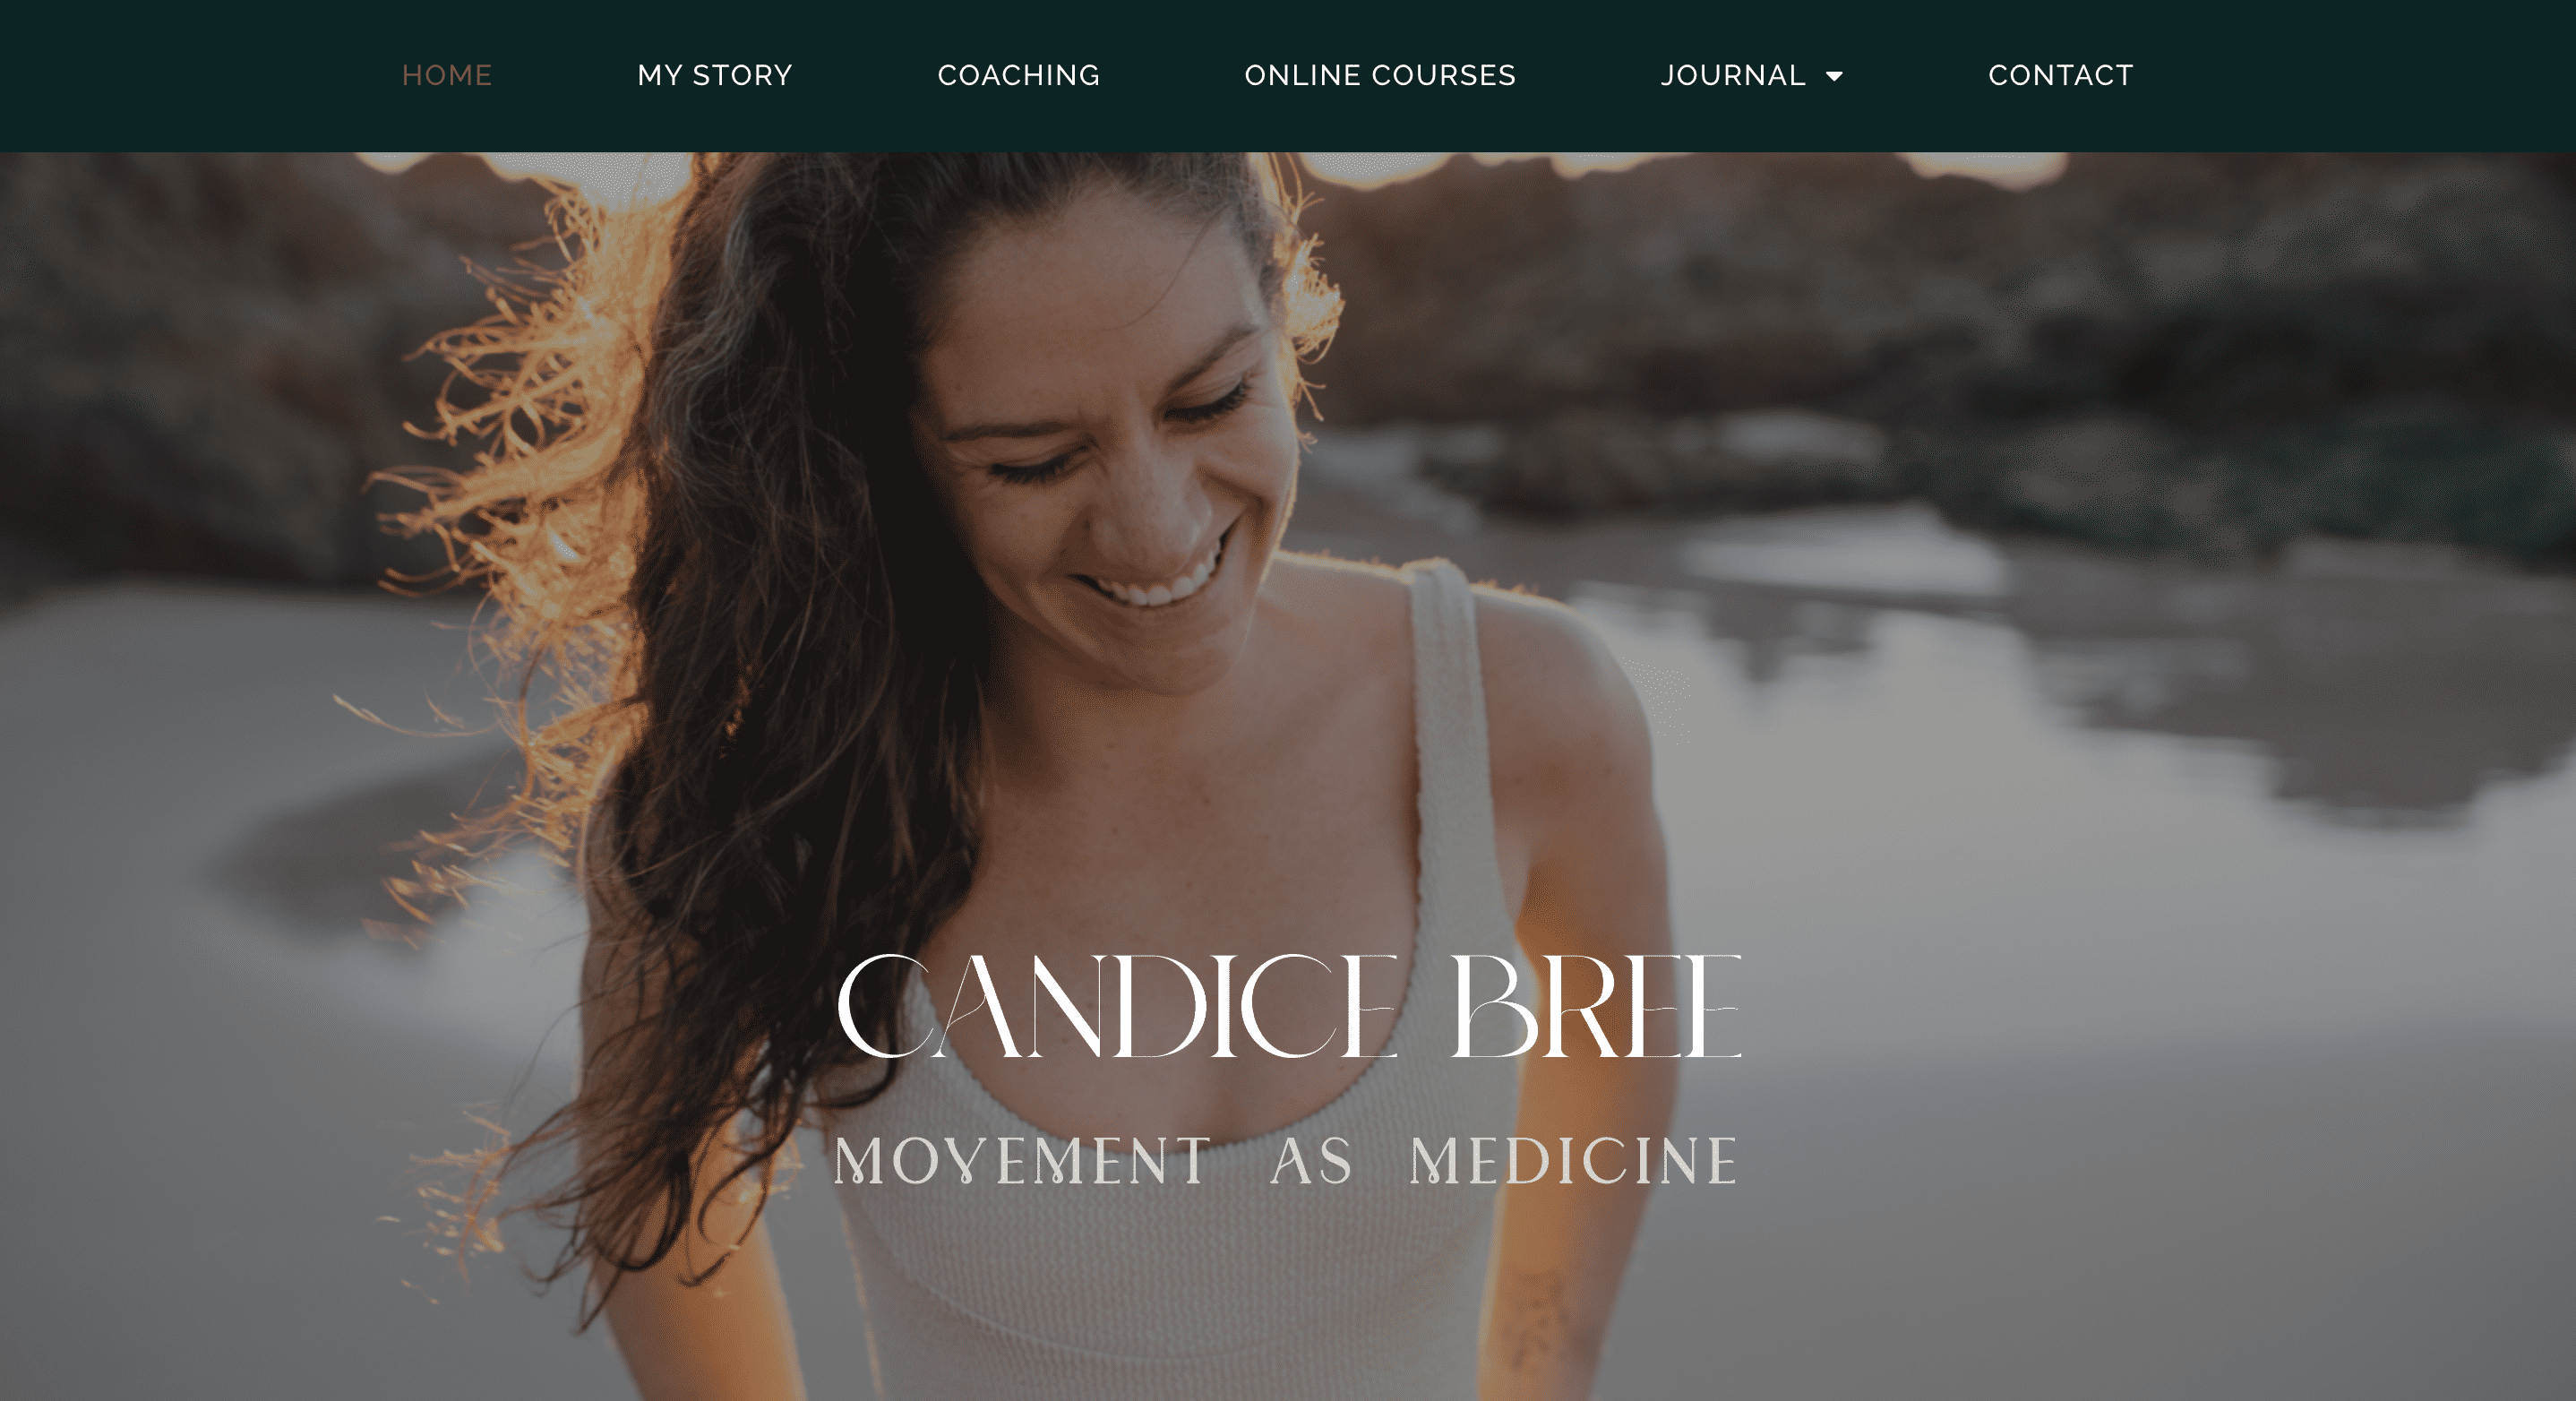 candice bree | homepage